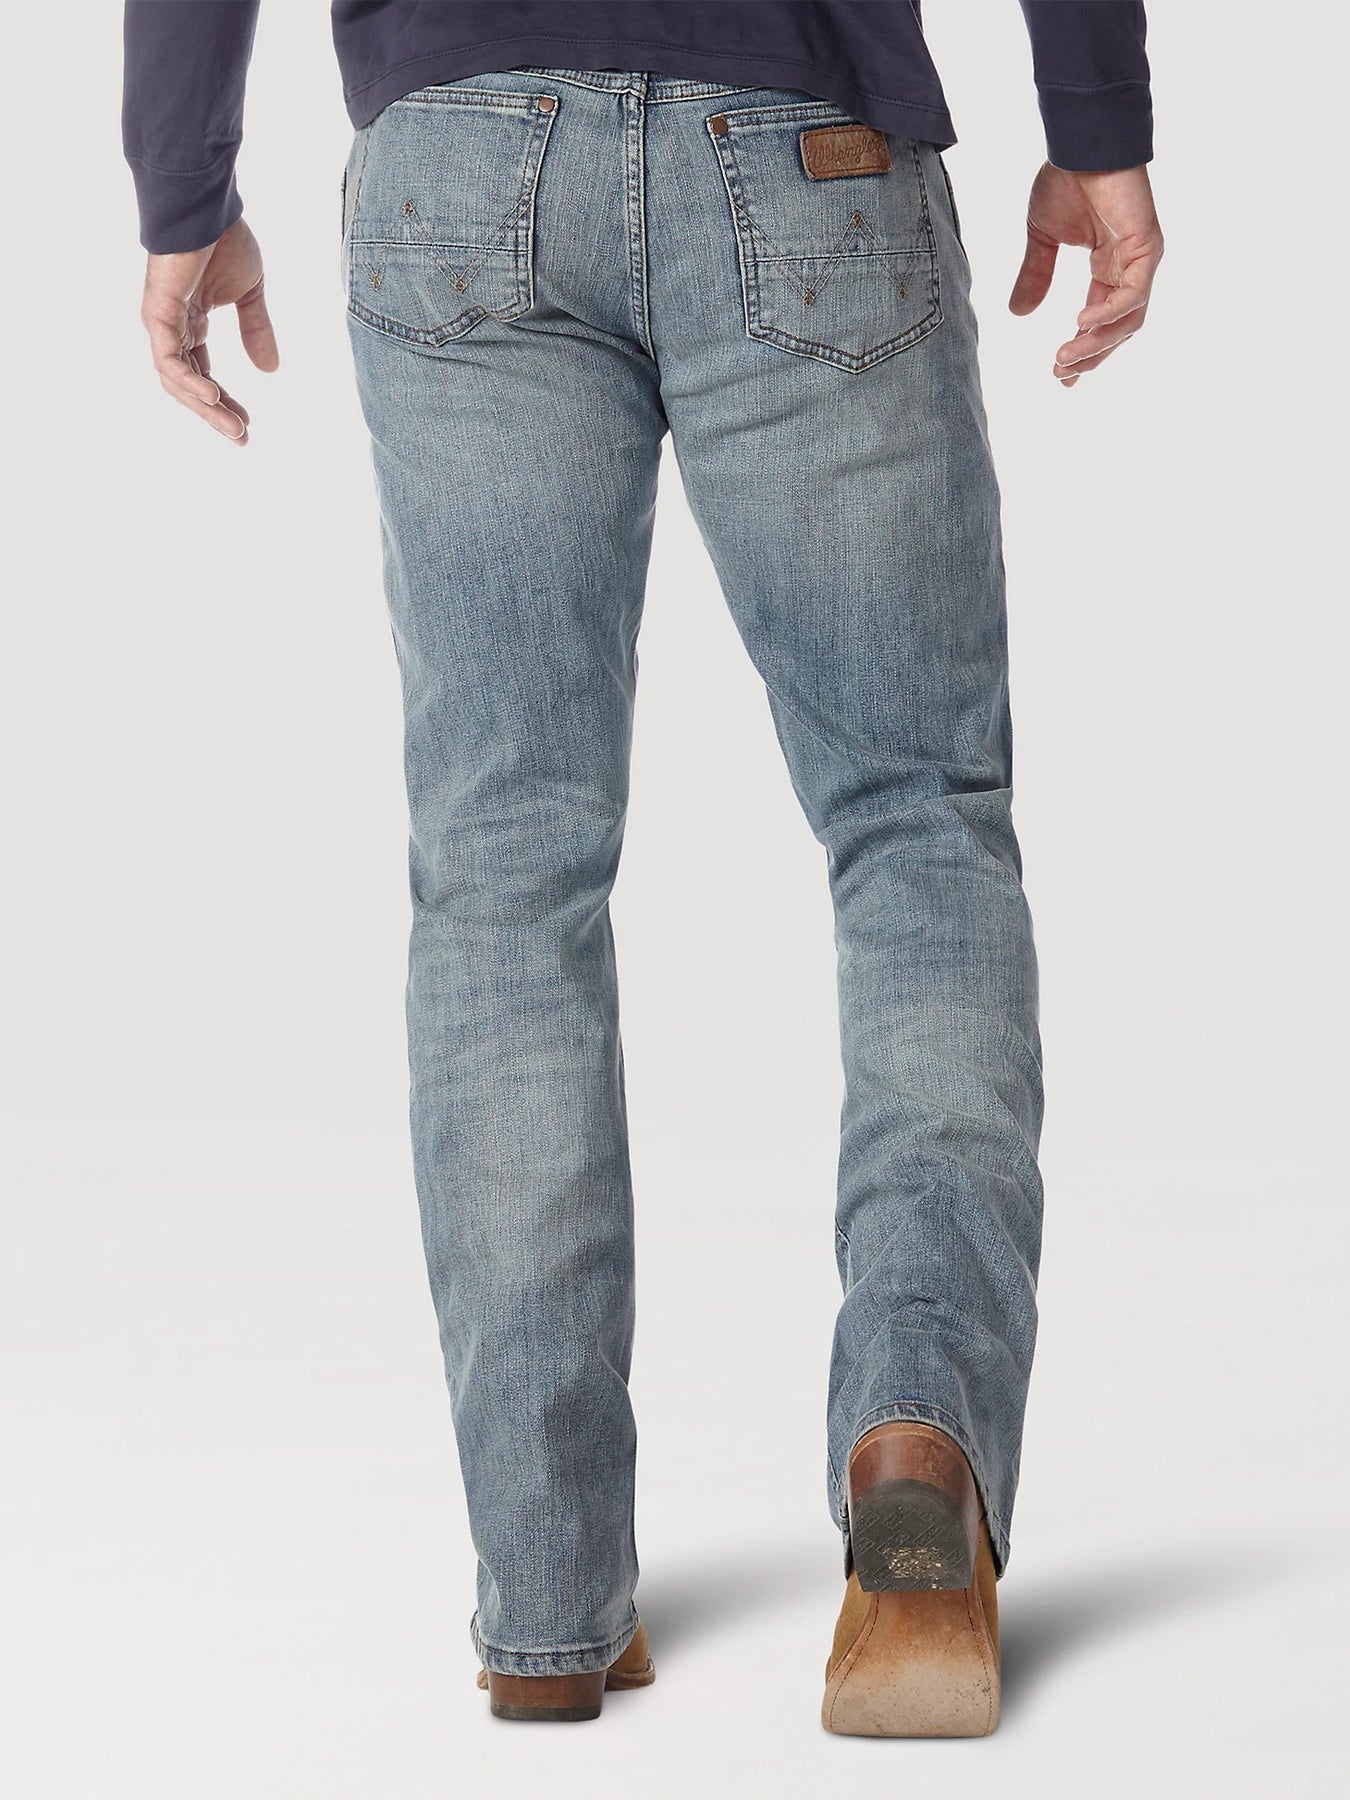 Wrangler Mens Jeans - Retro - Slim Fit - Bootcut - River Wash